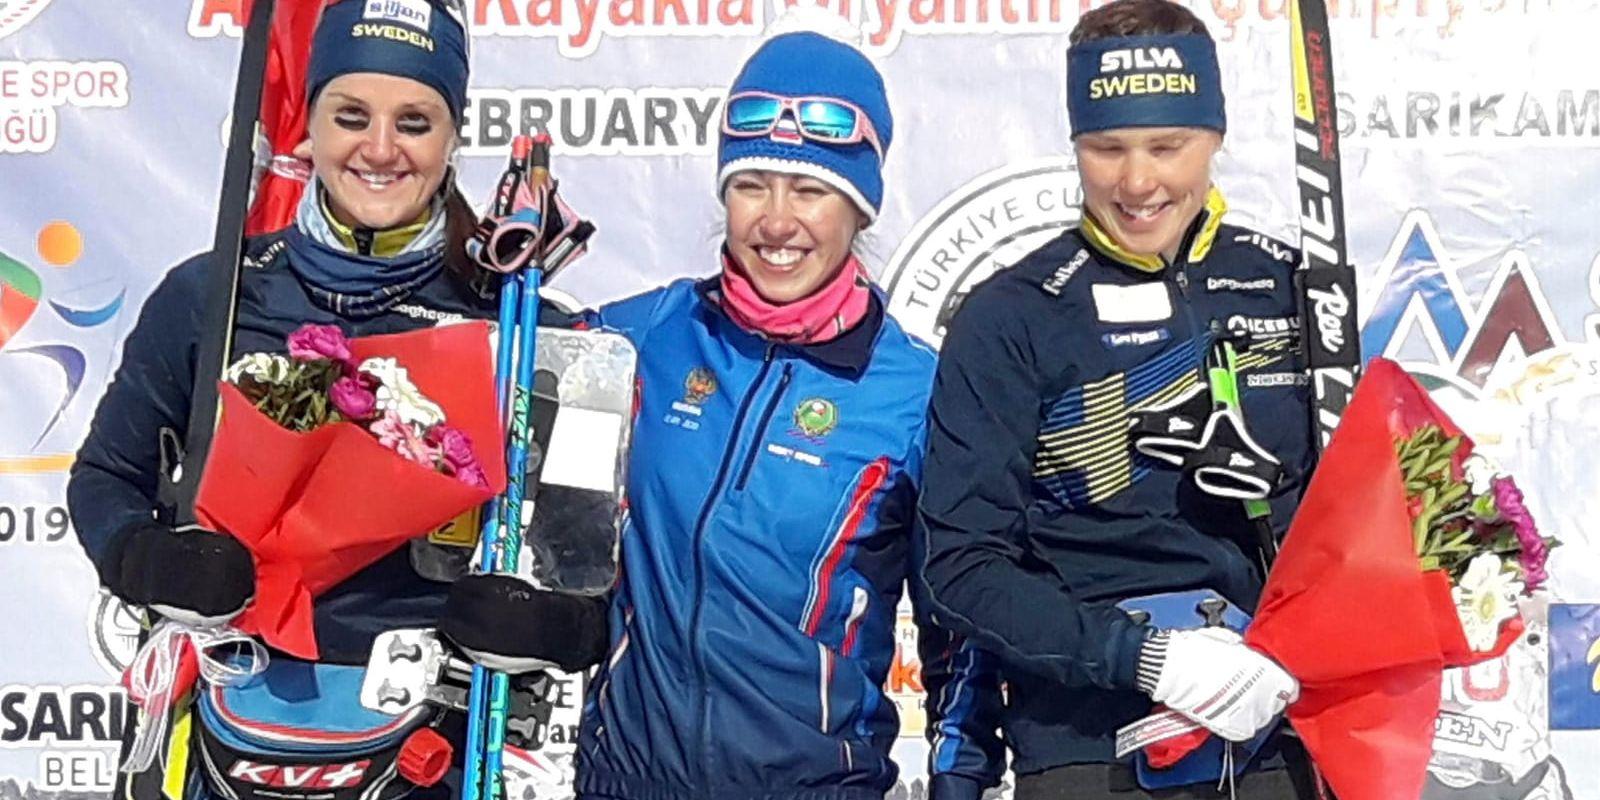 EM-medaljörerna i sprint på damsidan: Magdalena Olsson (silver), Alena Trapeznikova (guld), Tove Alexandersson (brons).